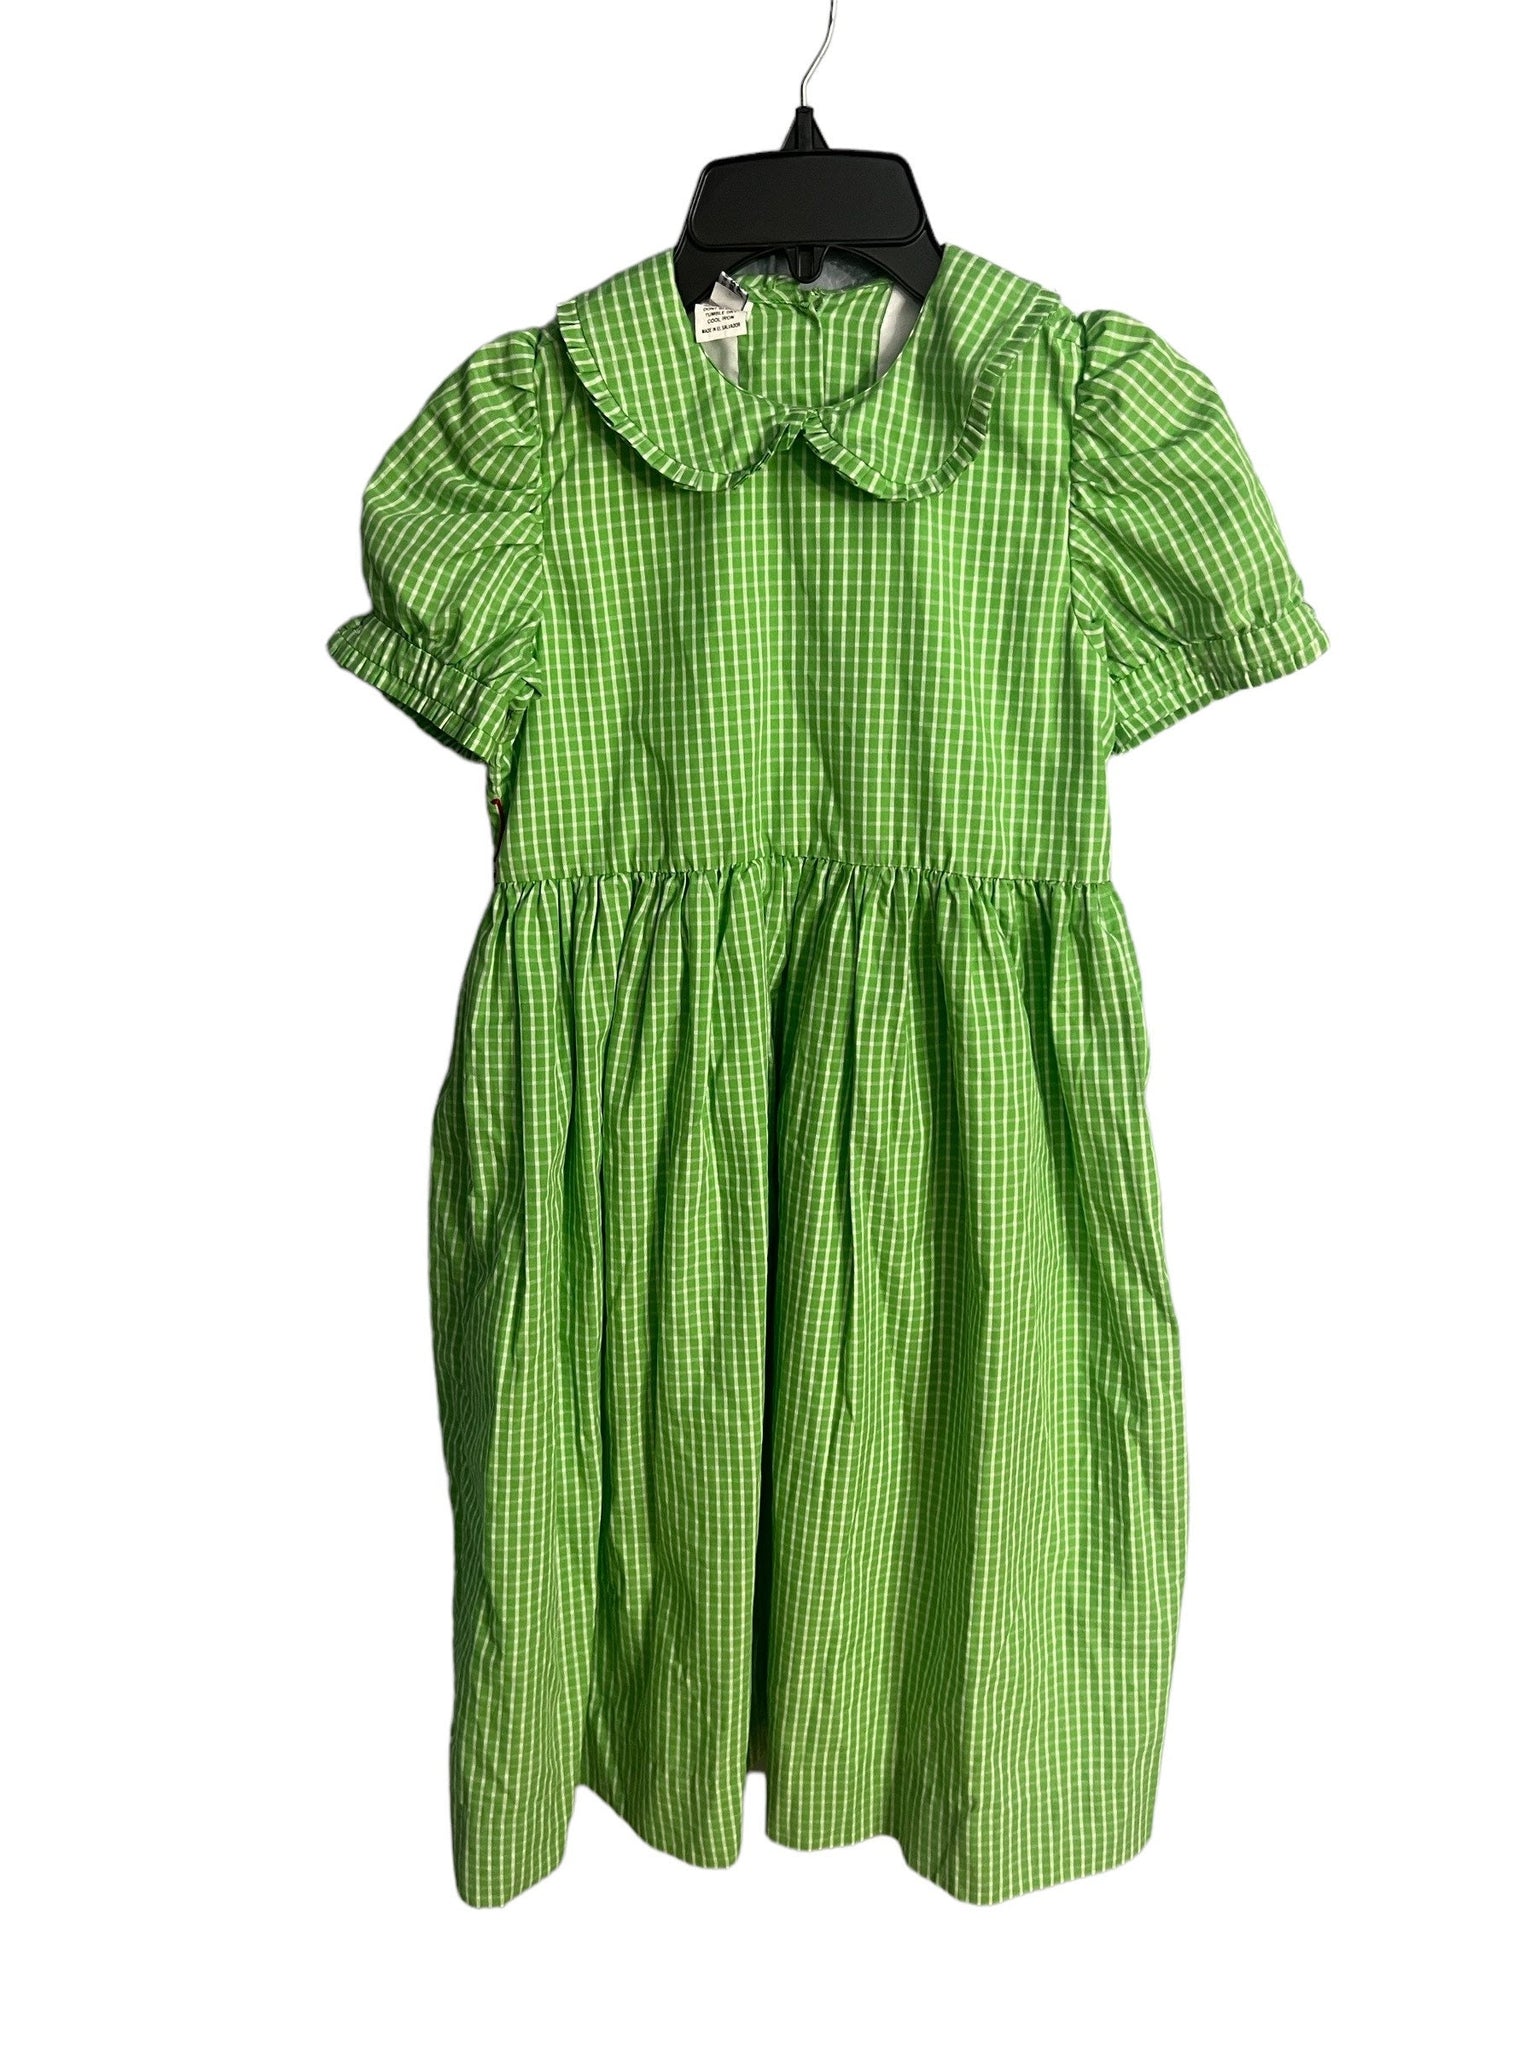 Vintage girls green dress 8 Oriental Express